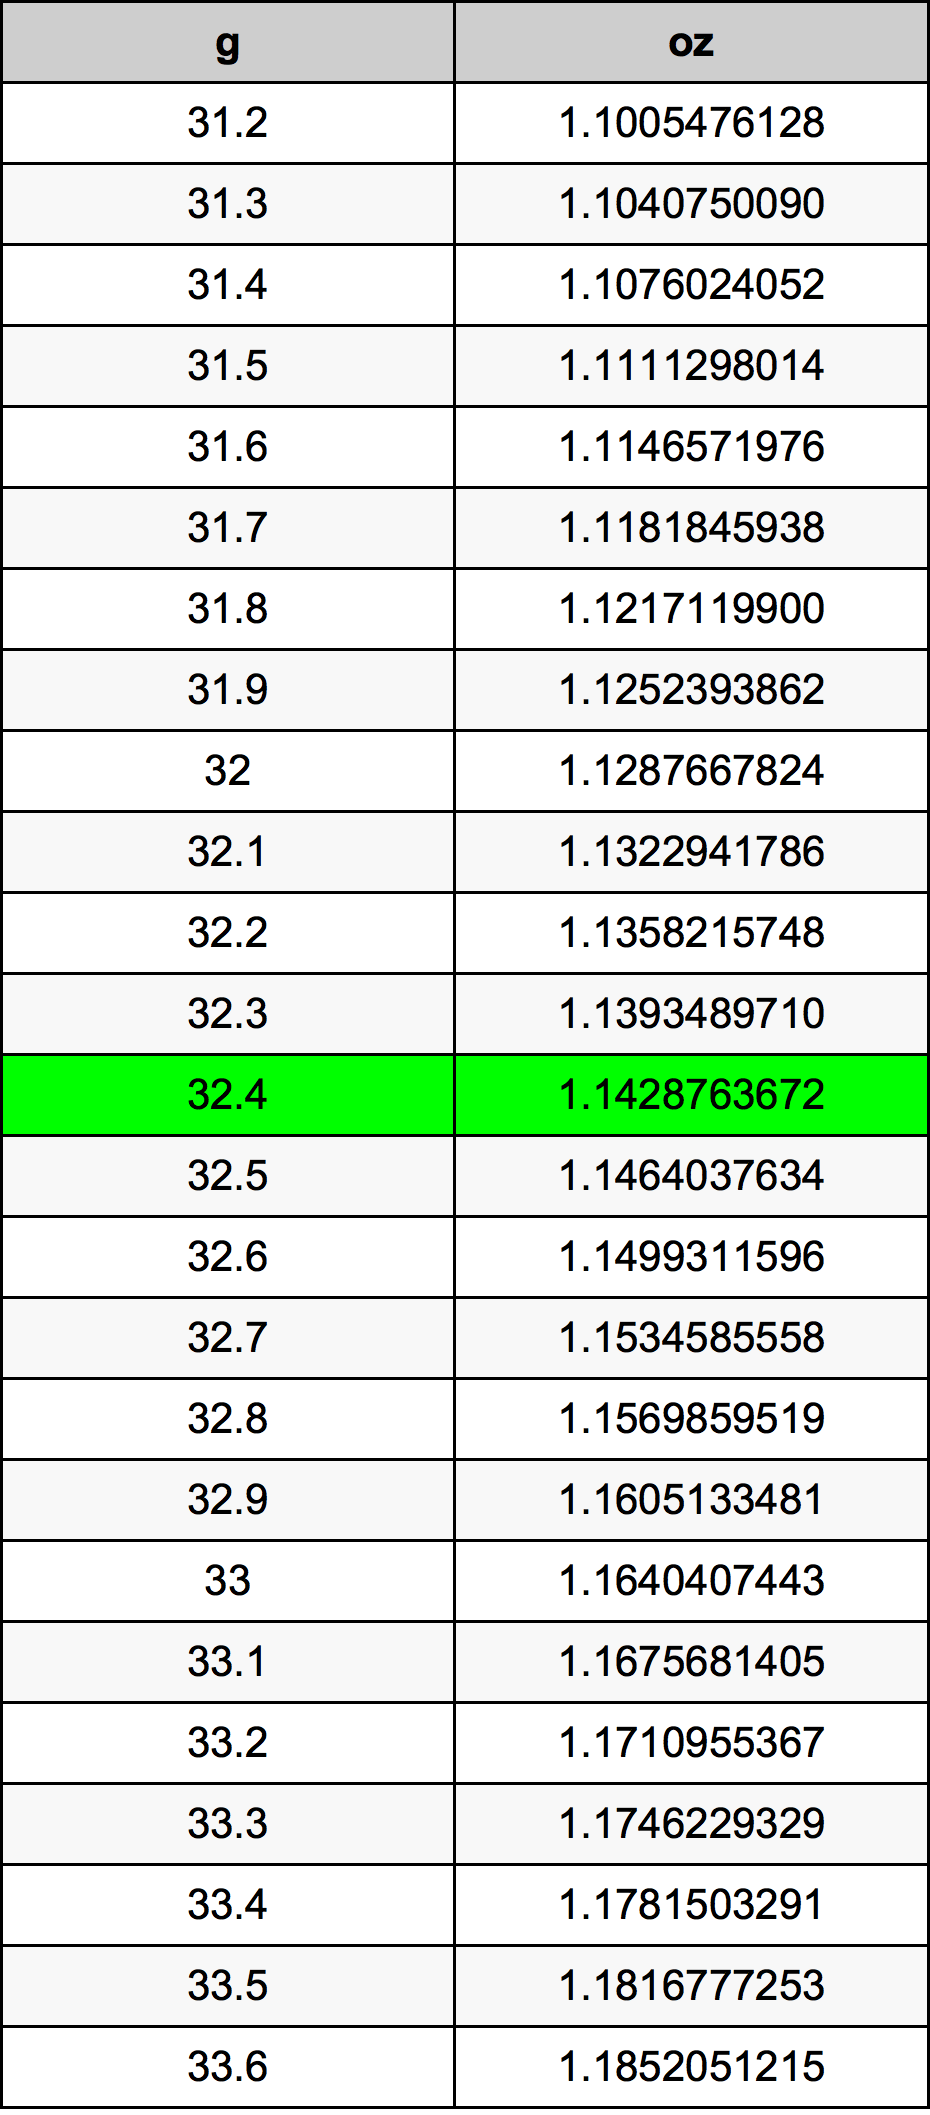 32.4 غرام جدول تحويل